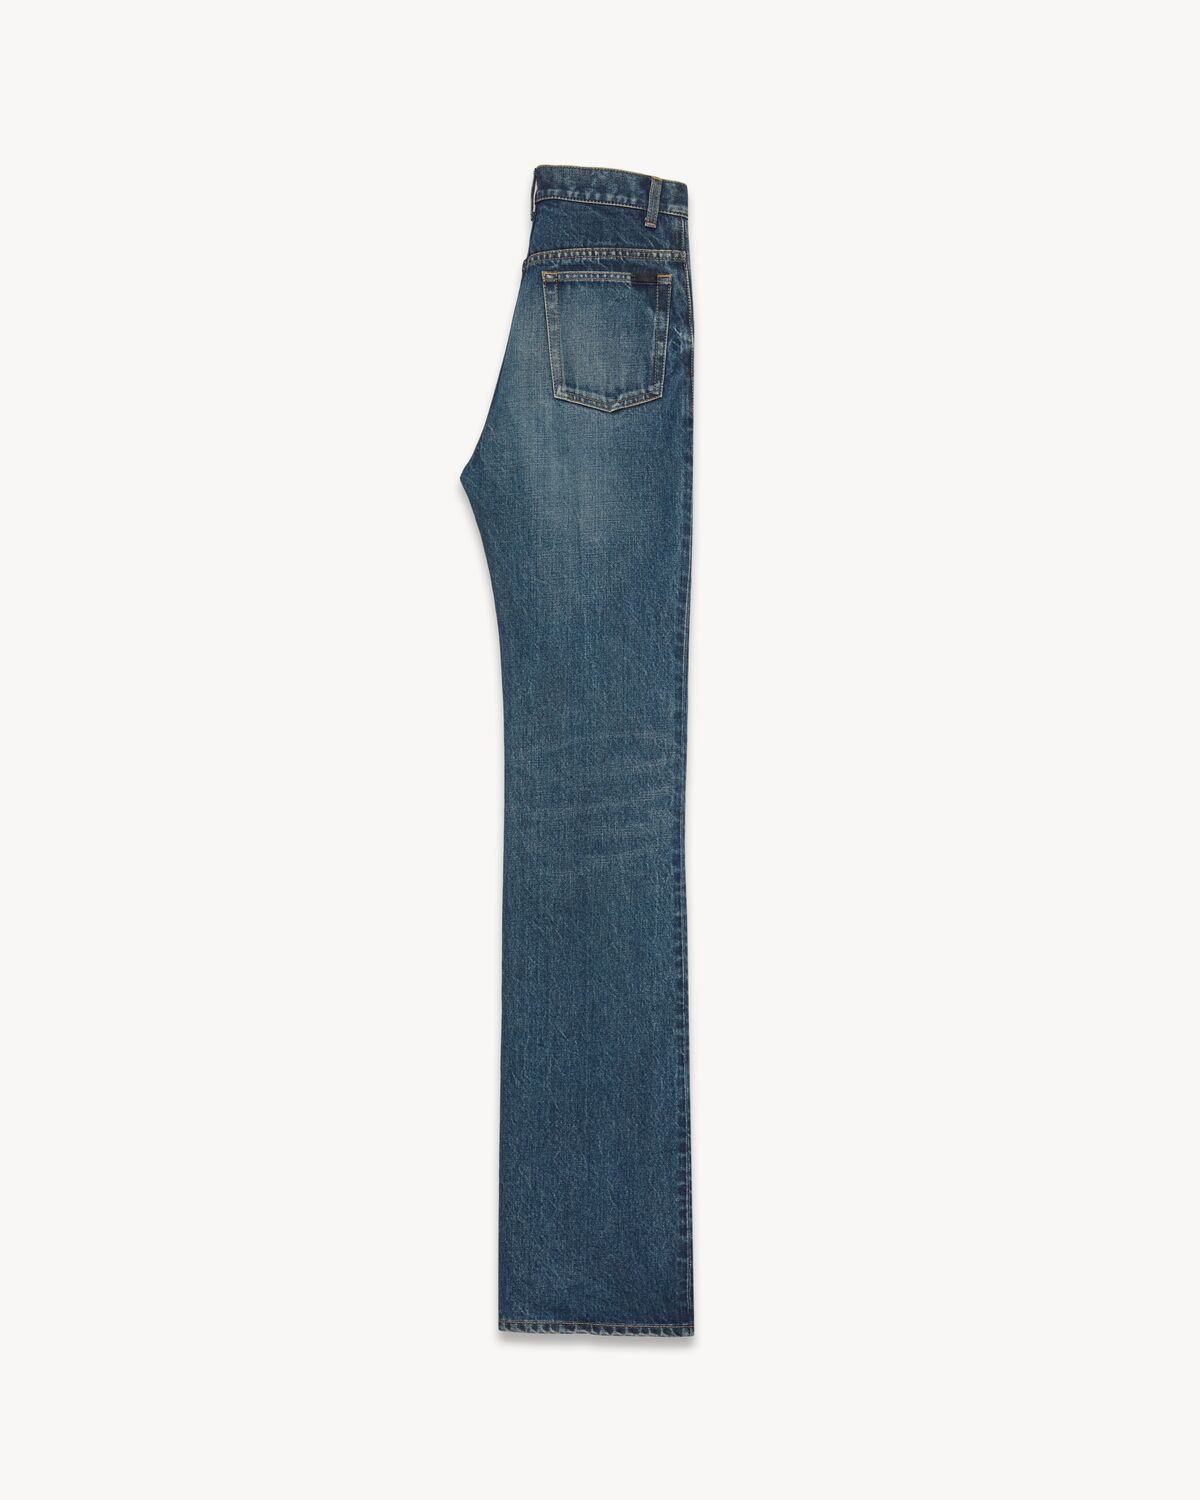 CLYDE Jeans aus August Blue Denim